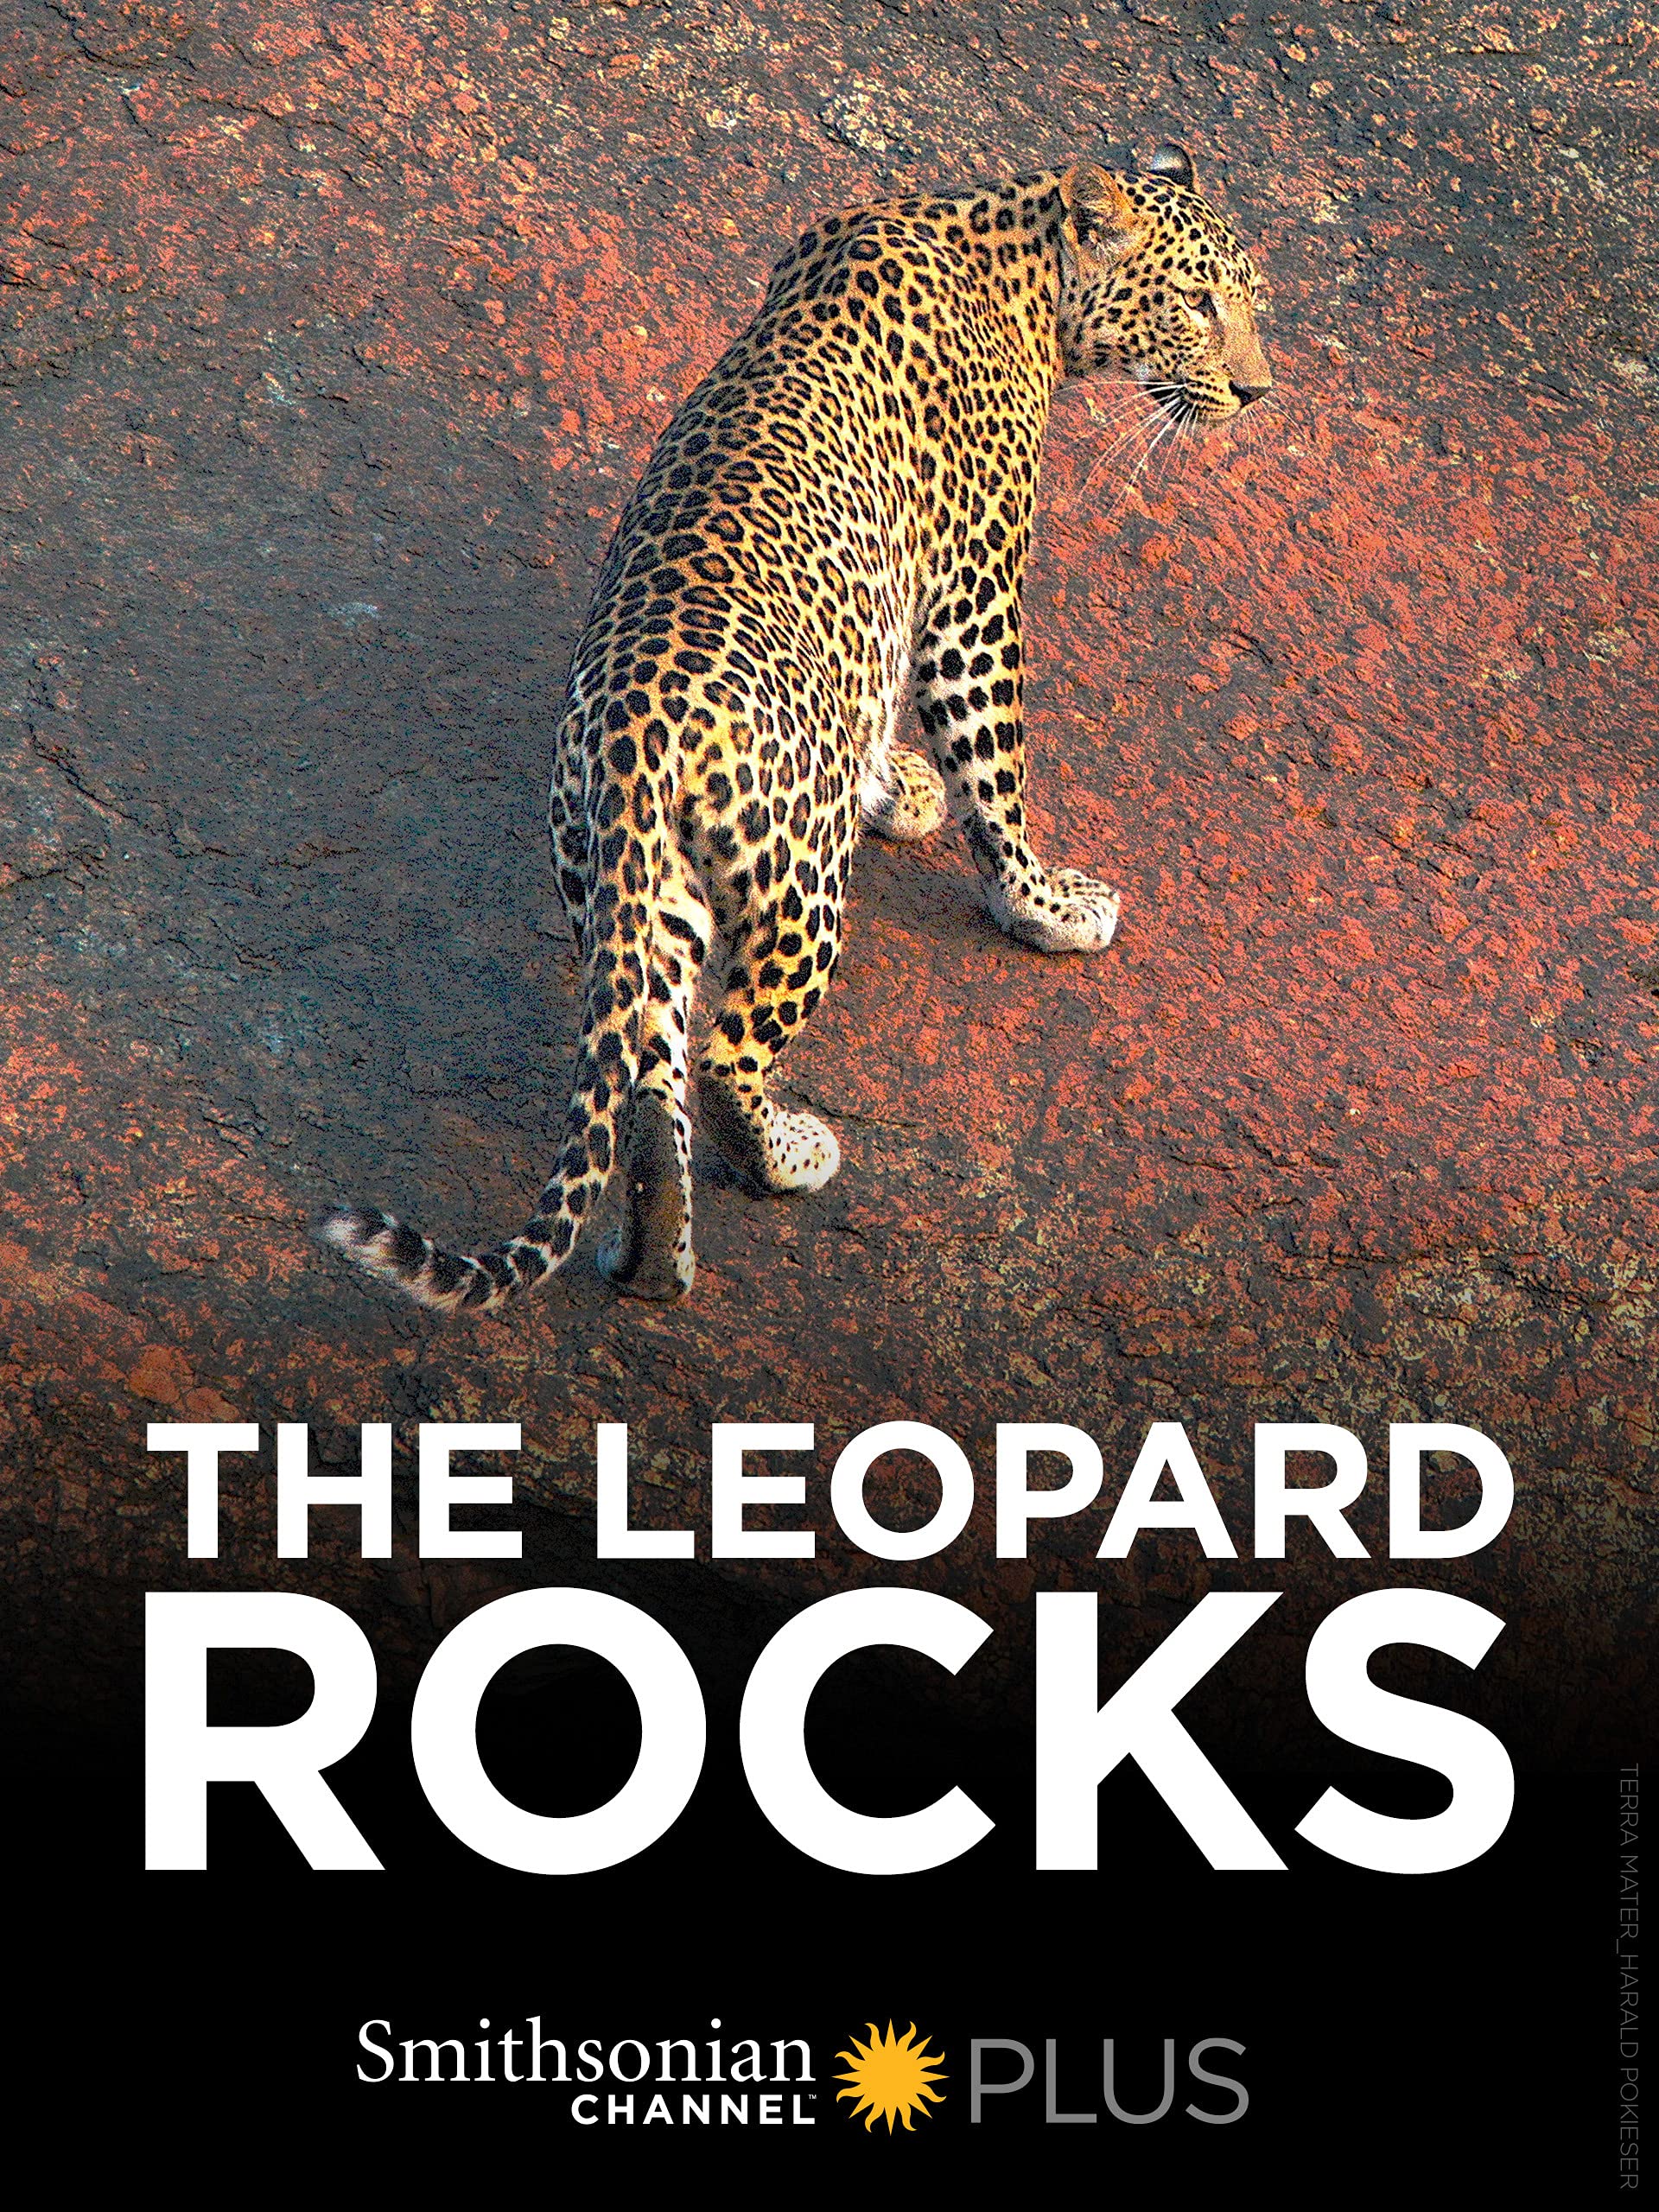 La roca del leopardo